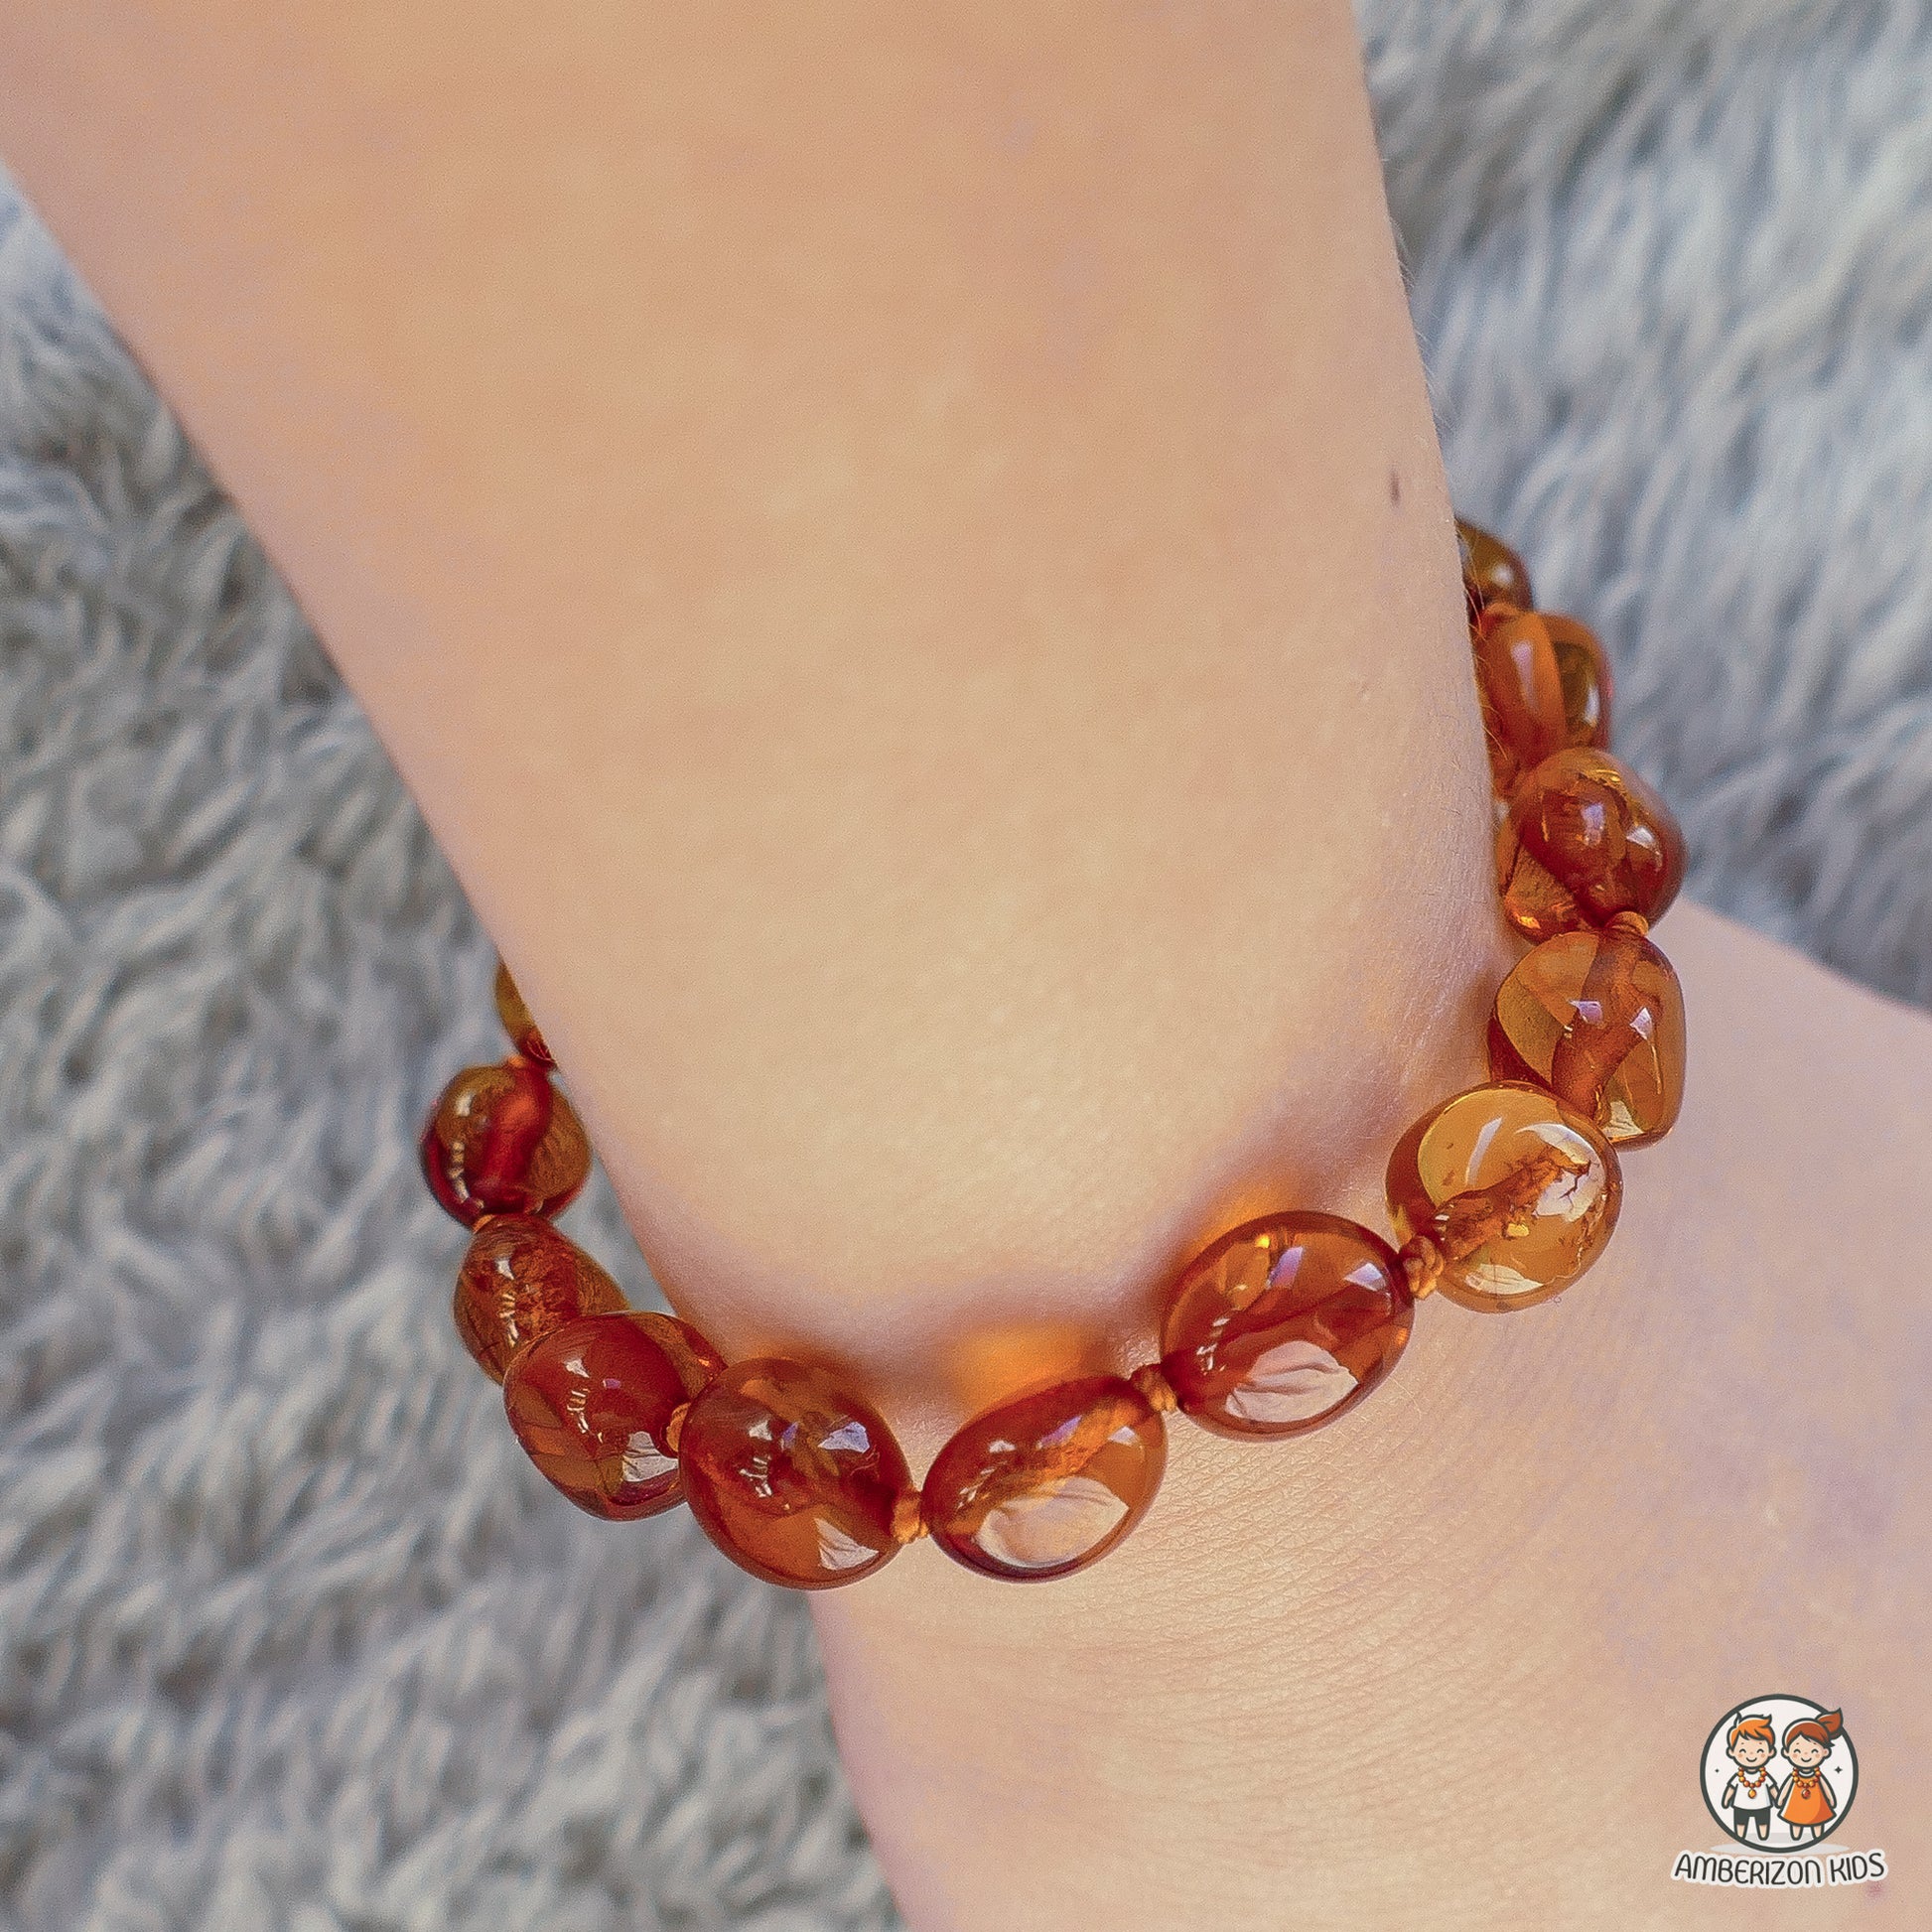 Cognac AAA amber baby bracelet-anklet - Jumbo baroque beads